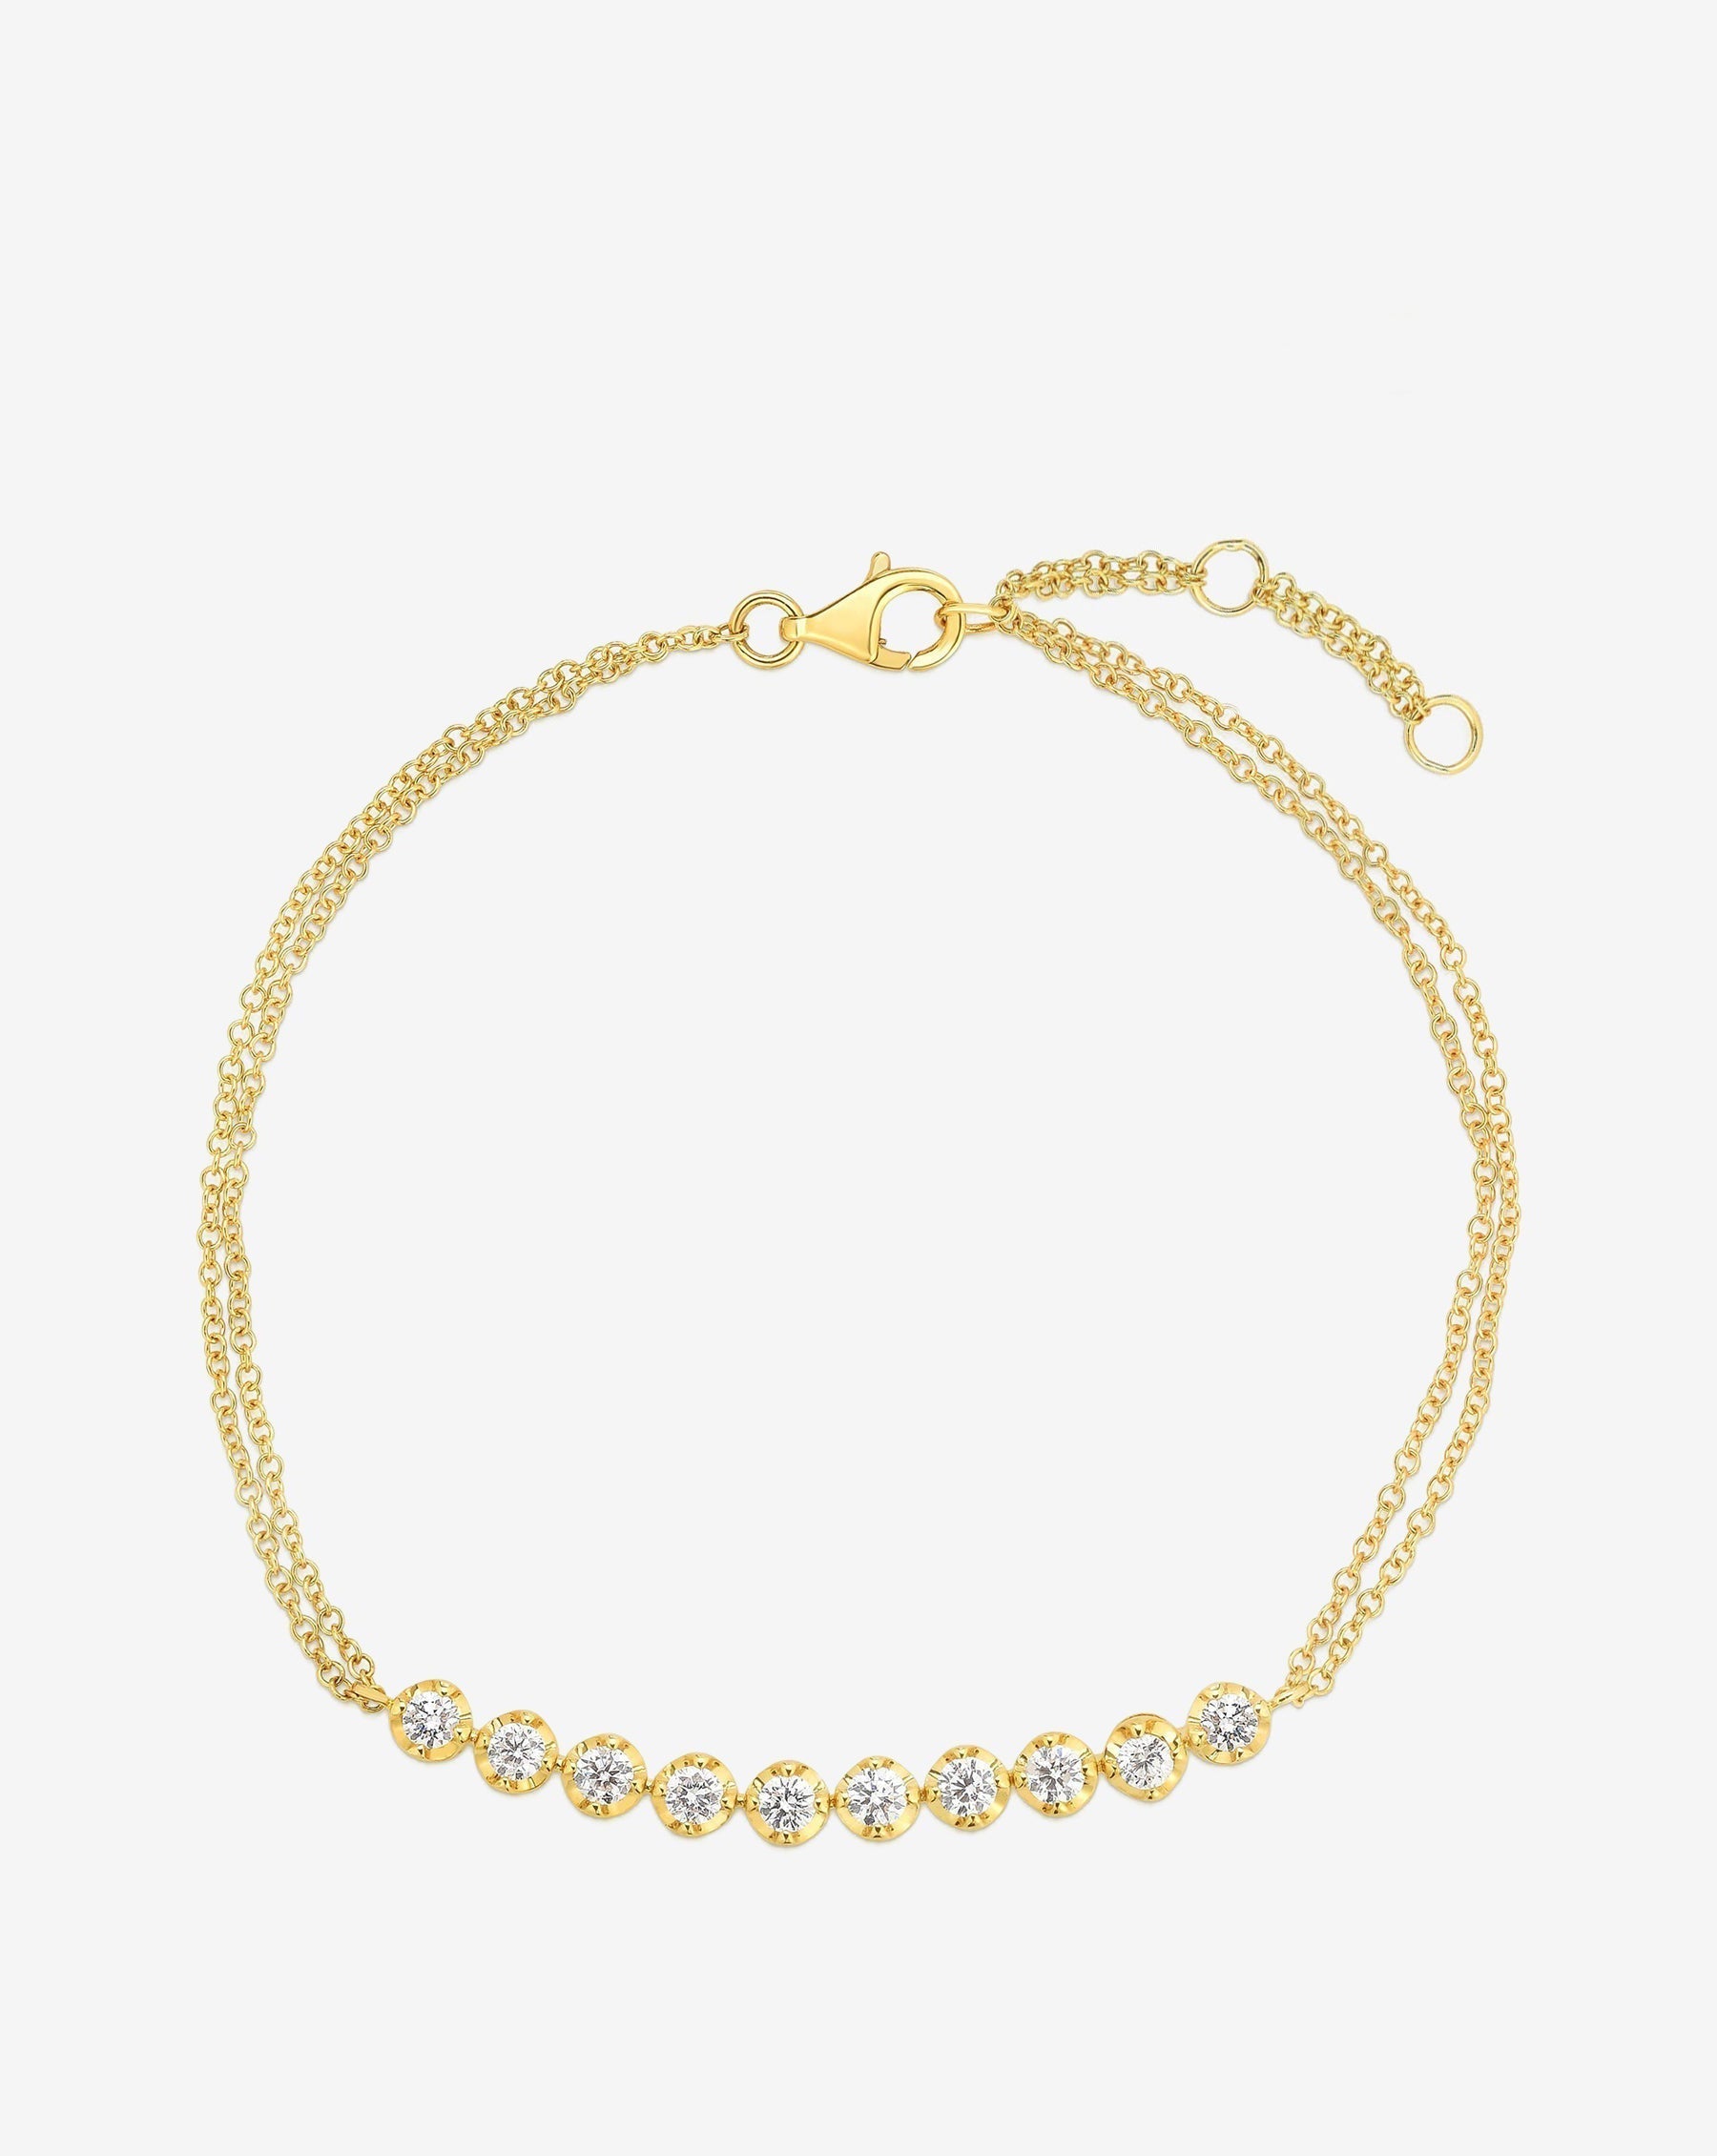 7.14 Carat Diamond Line Bracelet in White, Yellow or Rose Gold